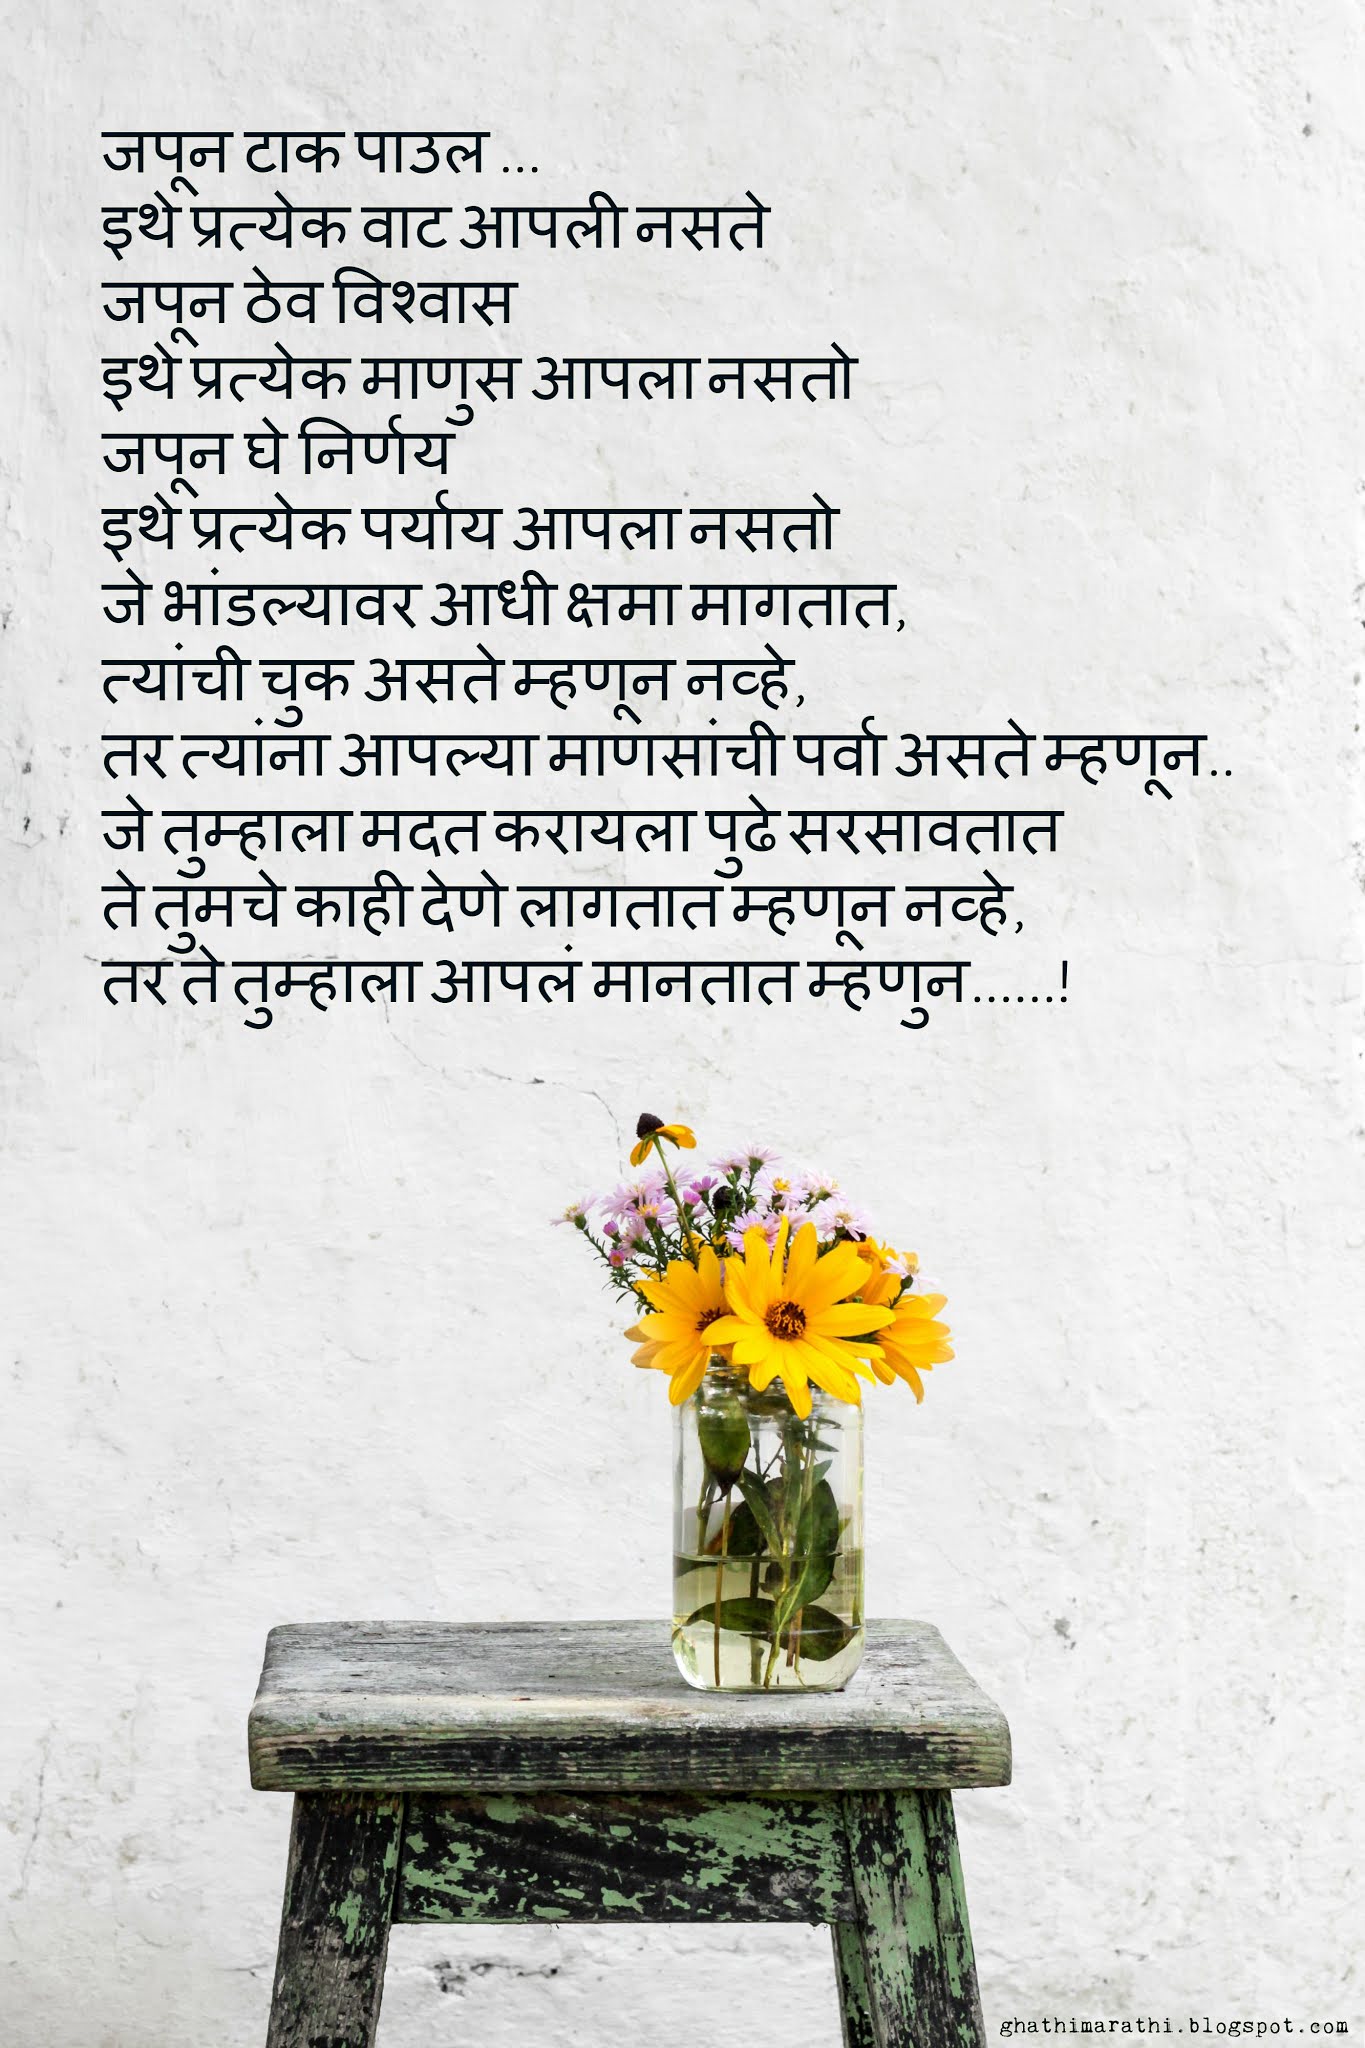 essay on gratitude in marathi